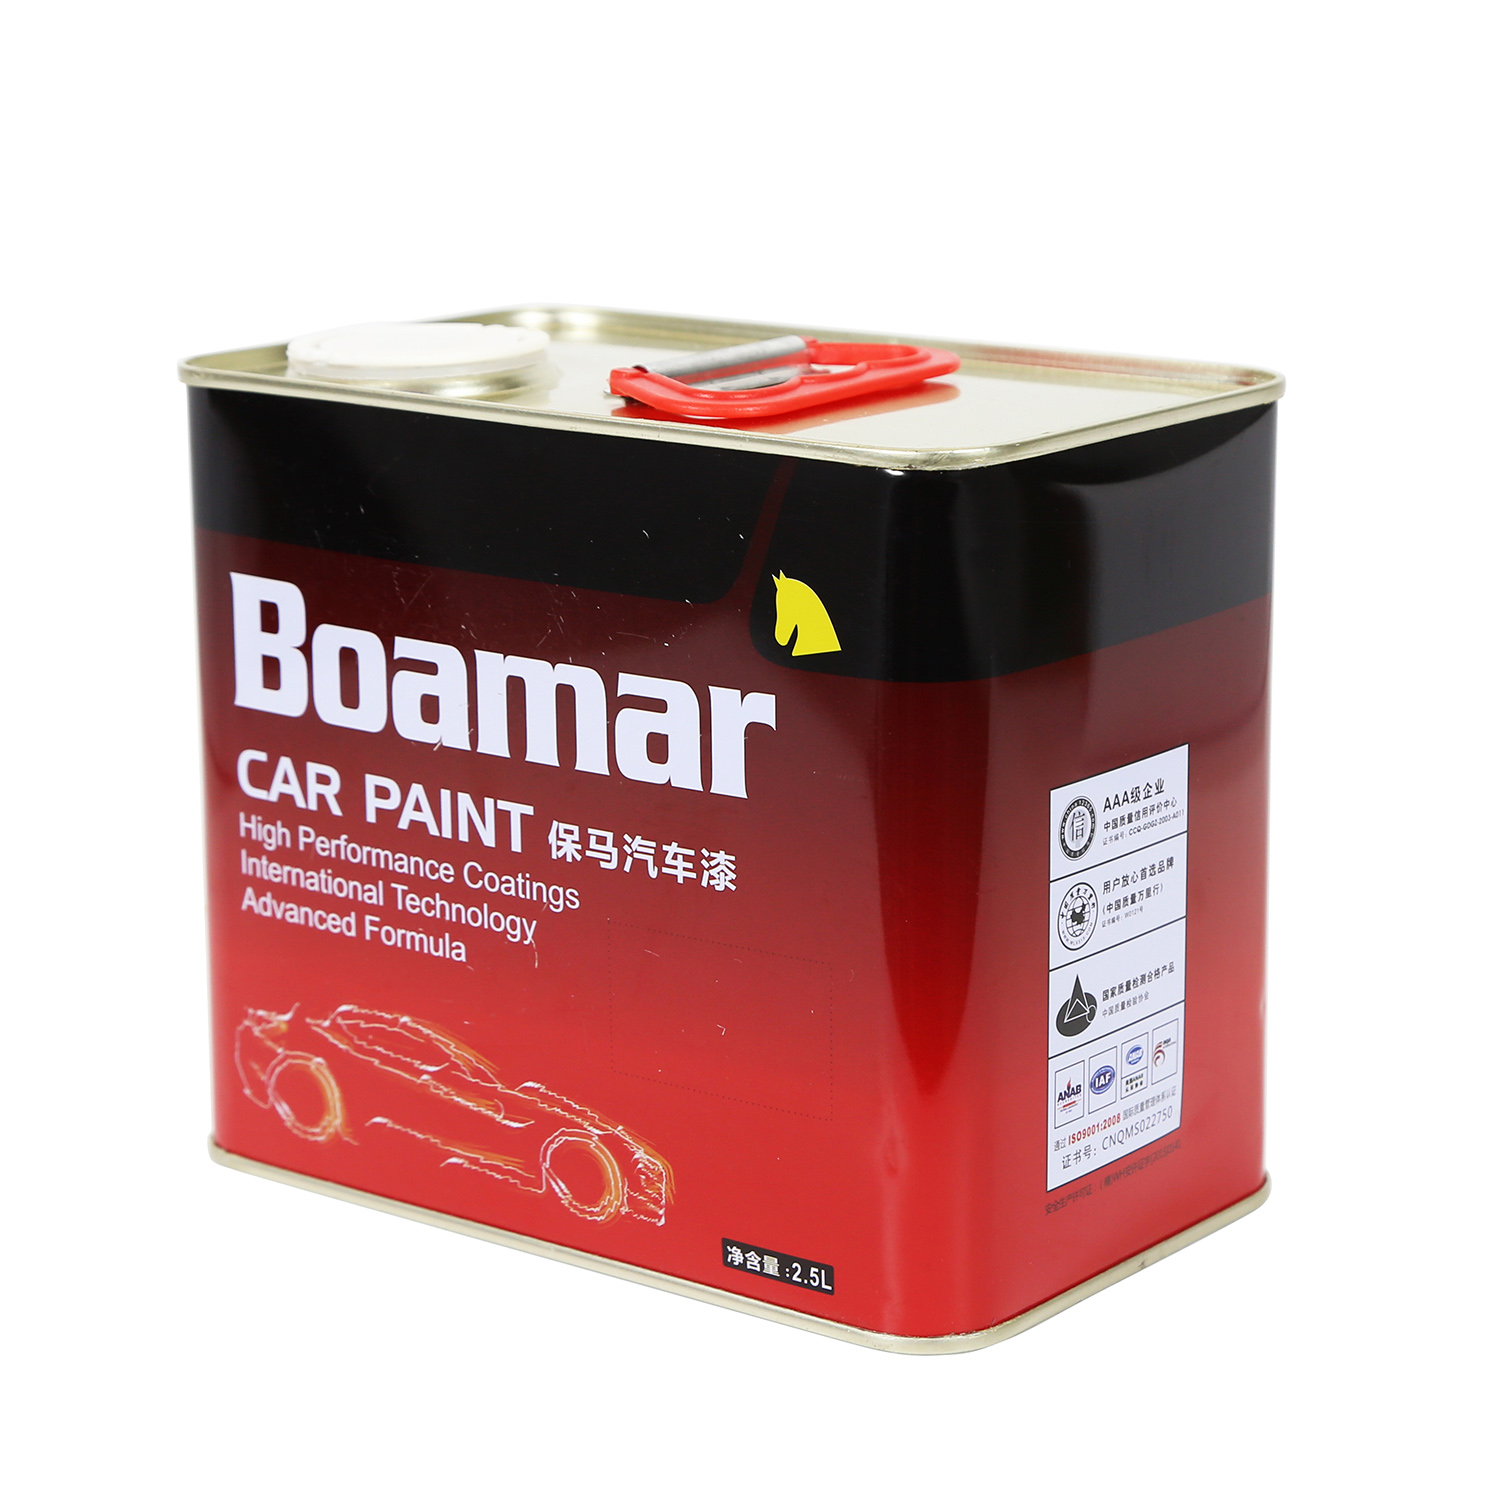 Boamar 2K Clearcoat Car Paint